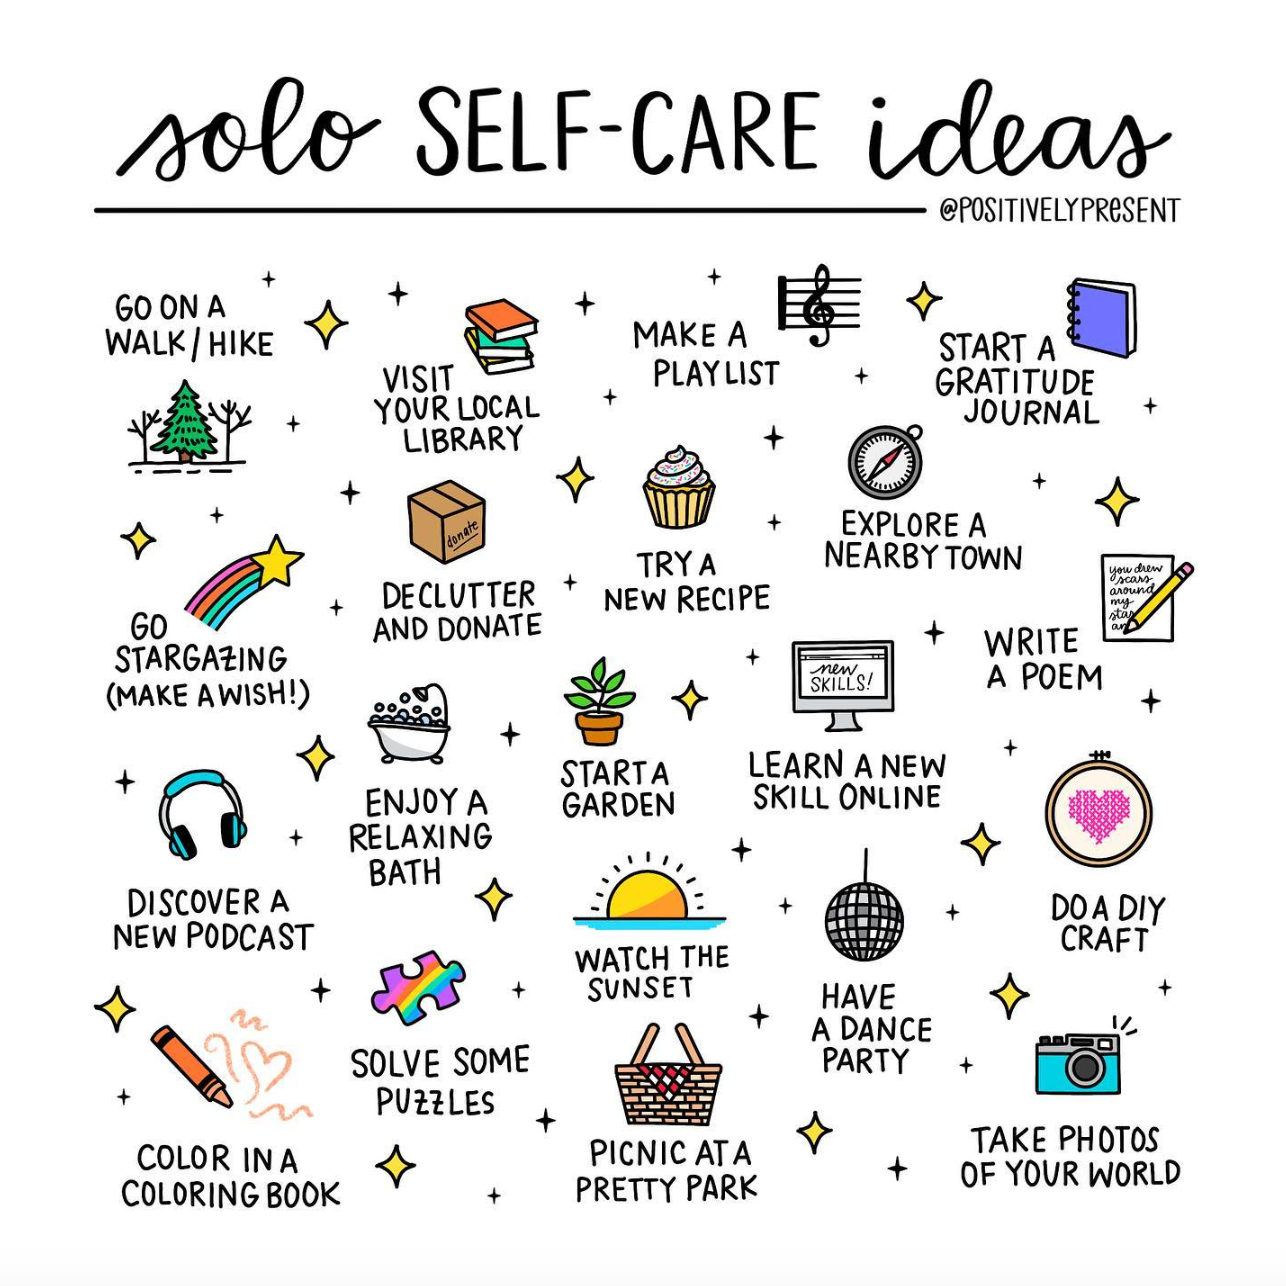 Monday Inspiration: Solo self-care ideas